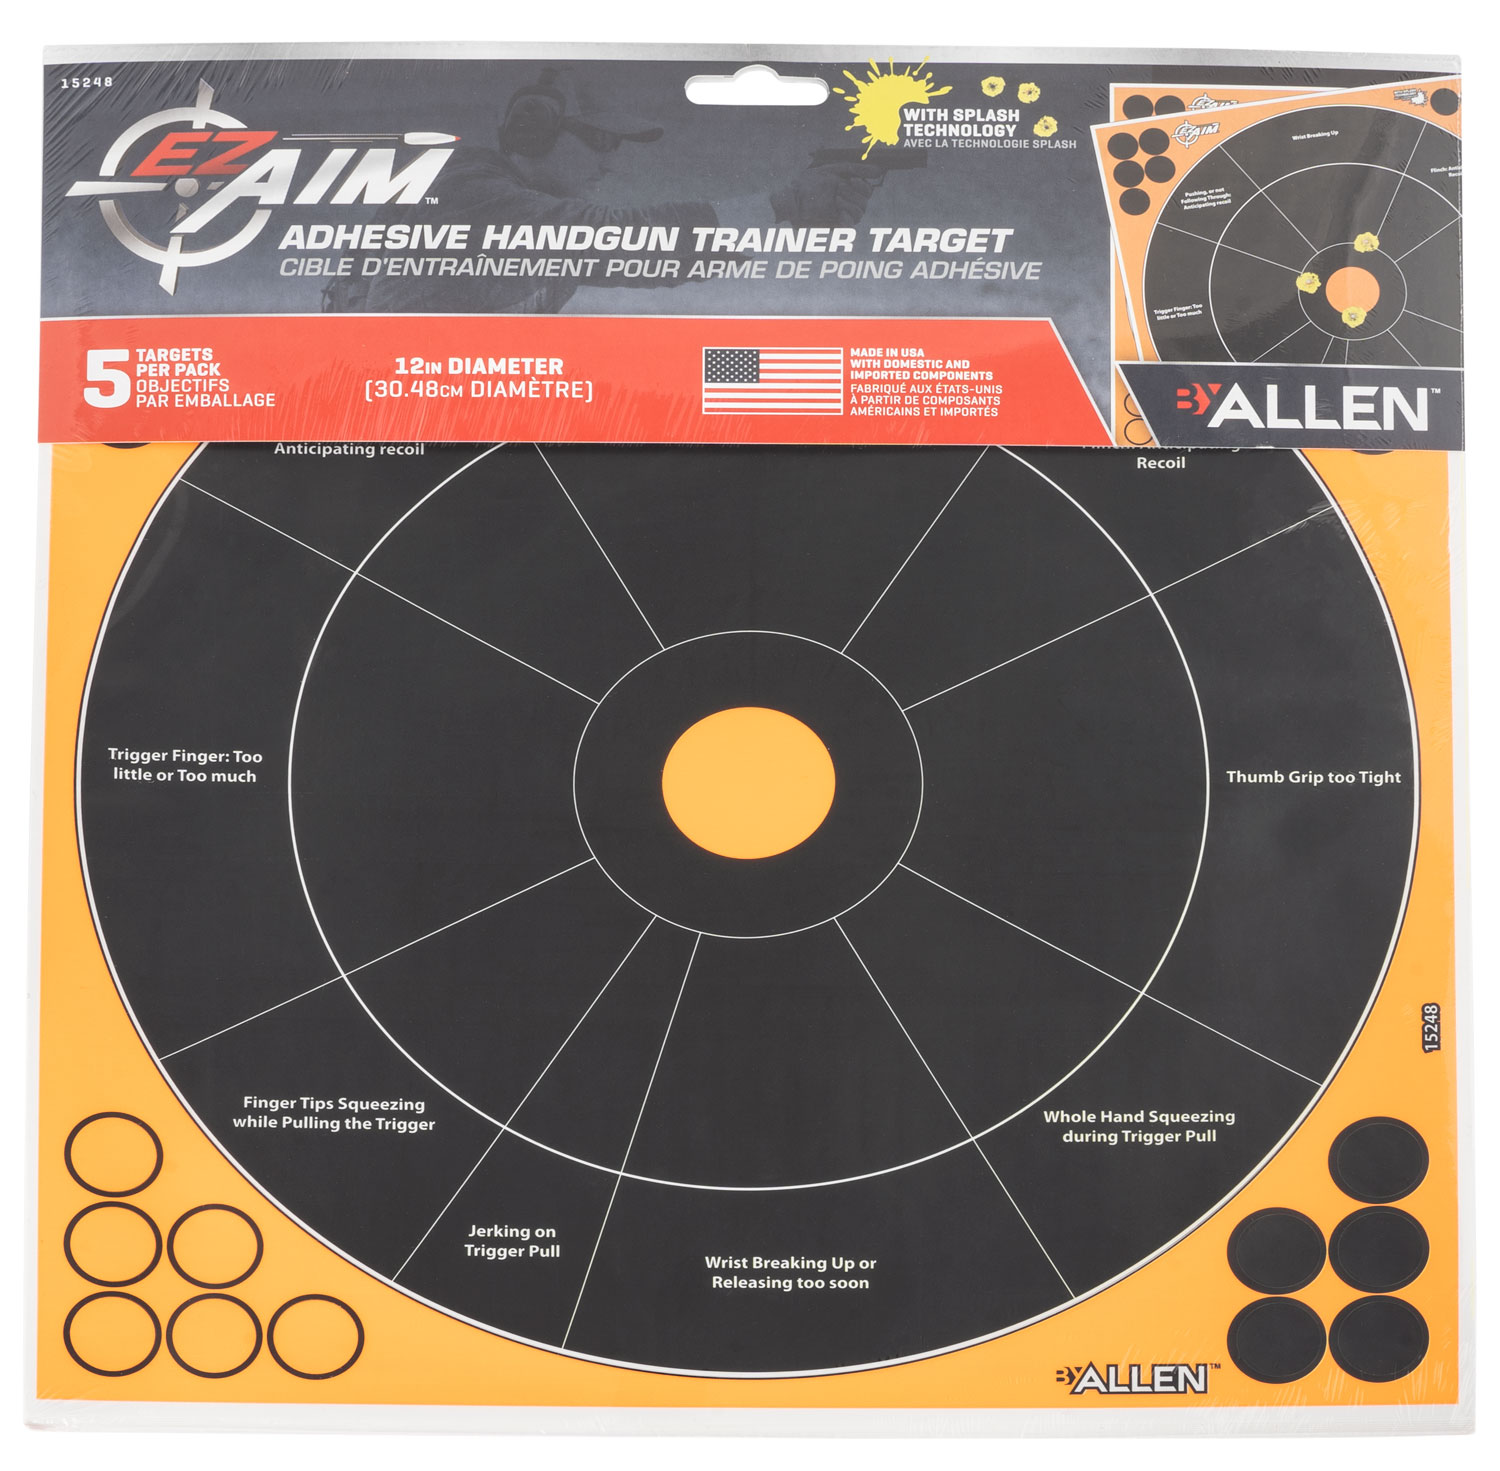 EZ-Aim 15248 Reflective Adhesive Target Splash Handgun Trainer Circle Self-Adhesive Paper Target 12